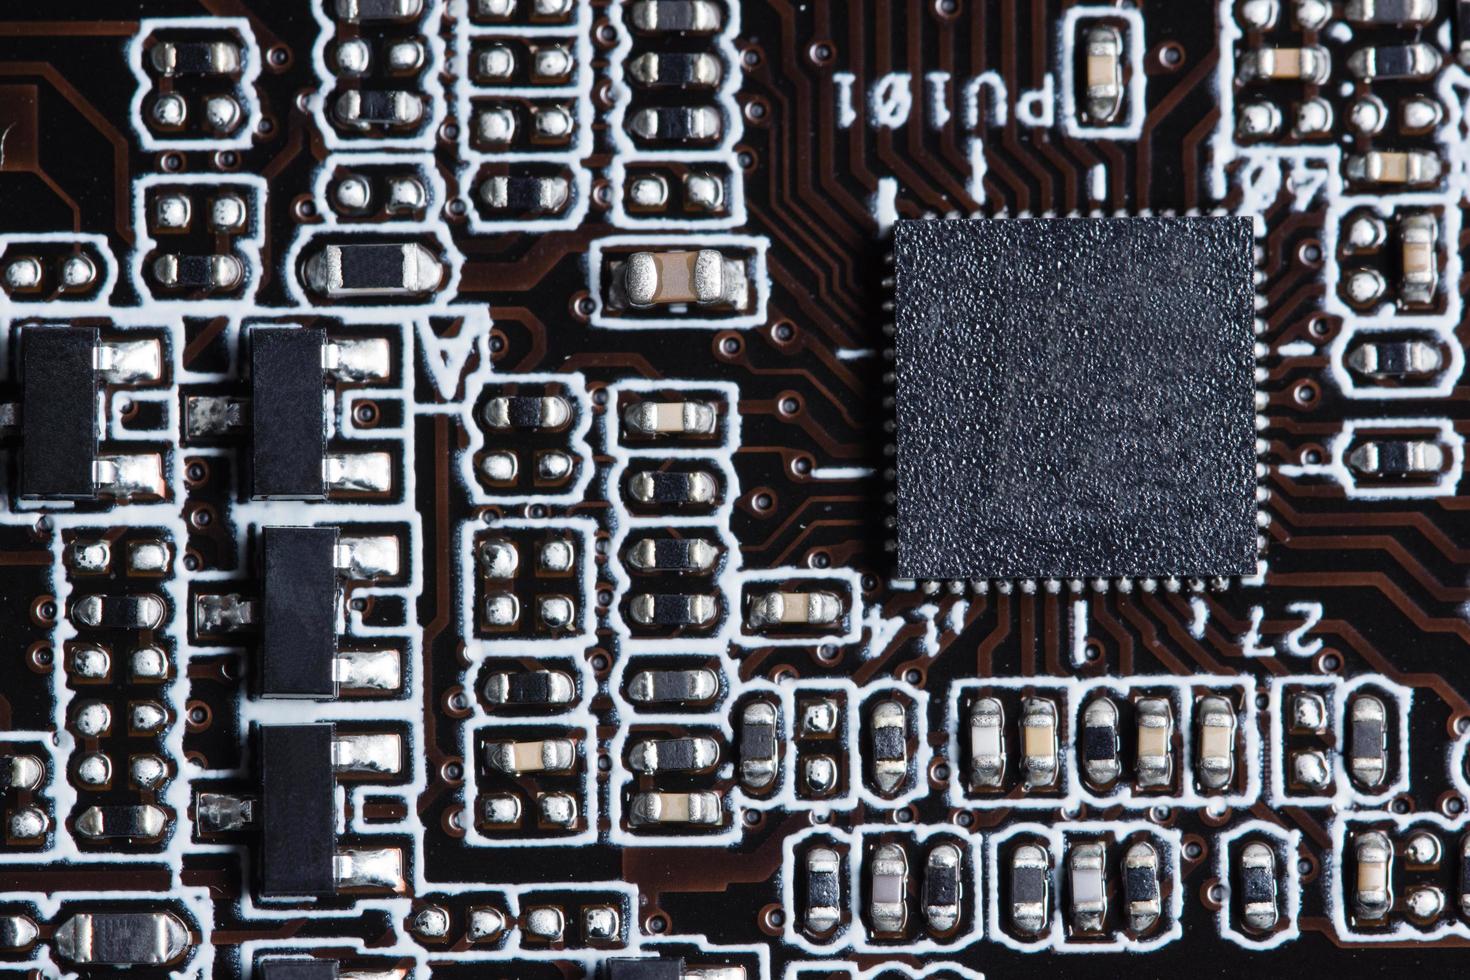 elektronische chiptechnologie bord foto